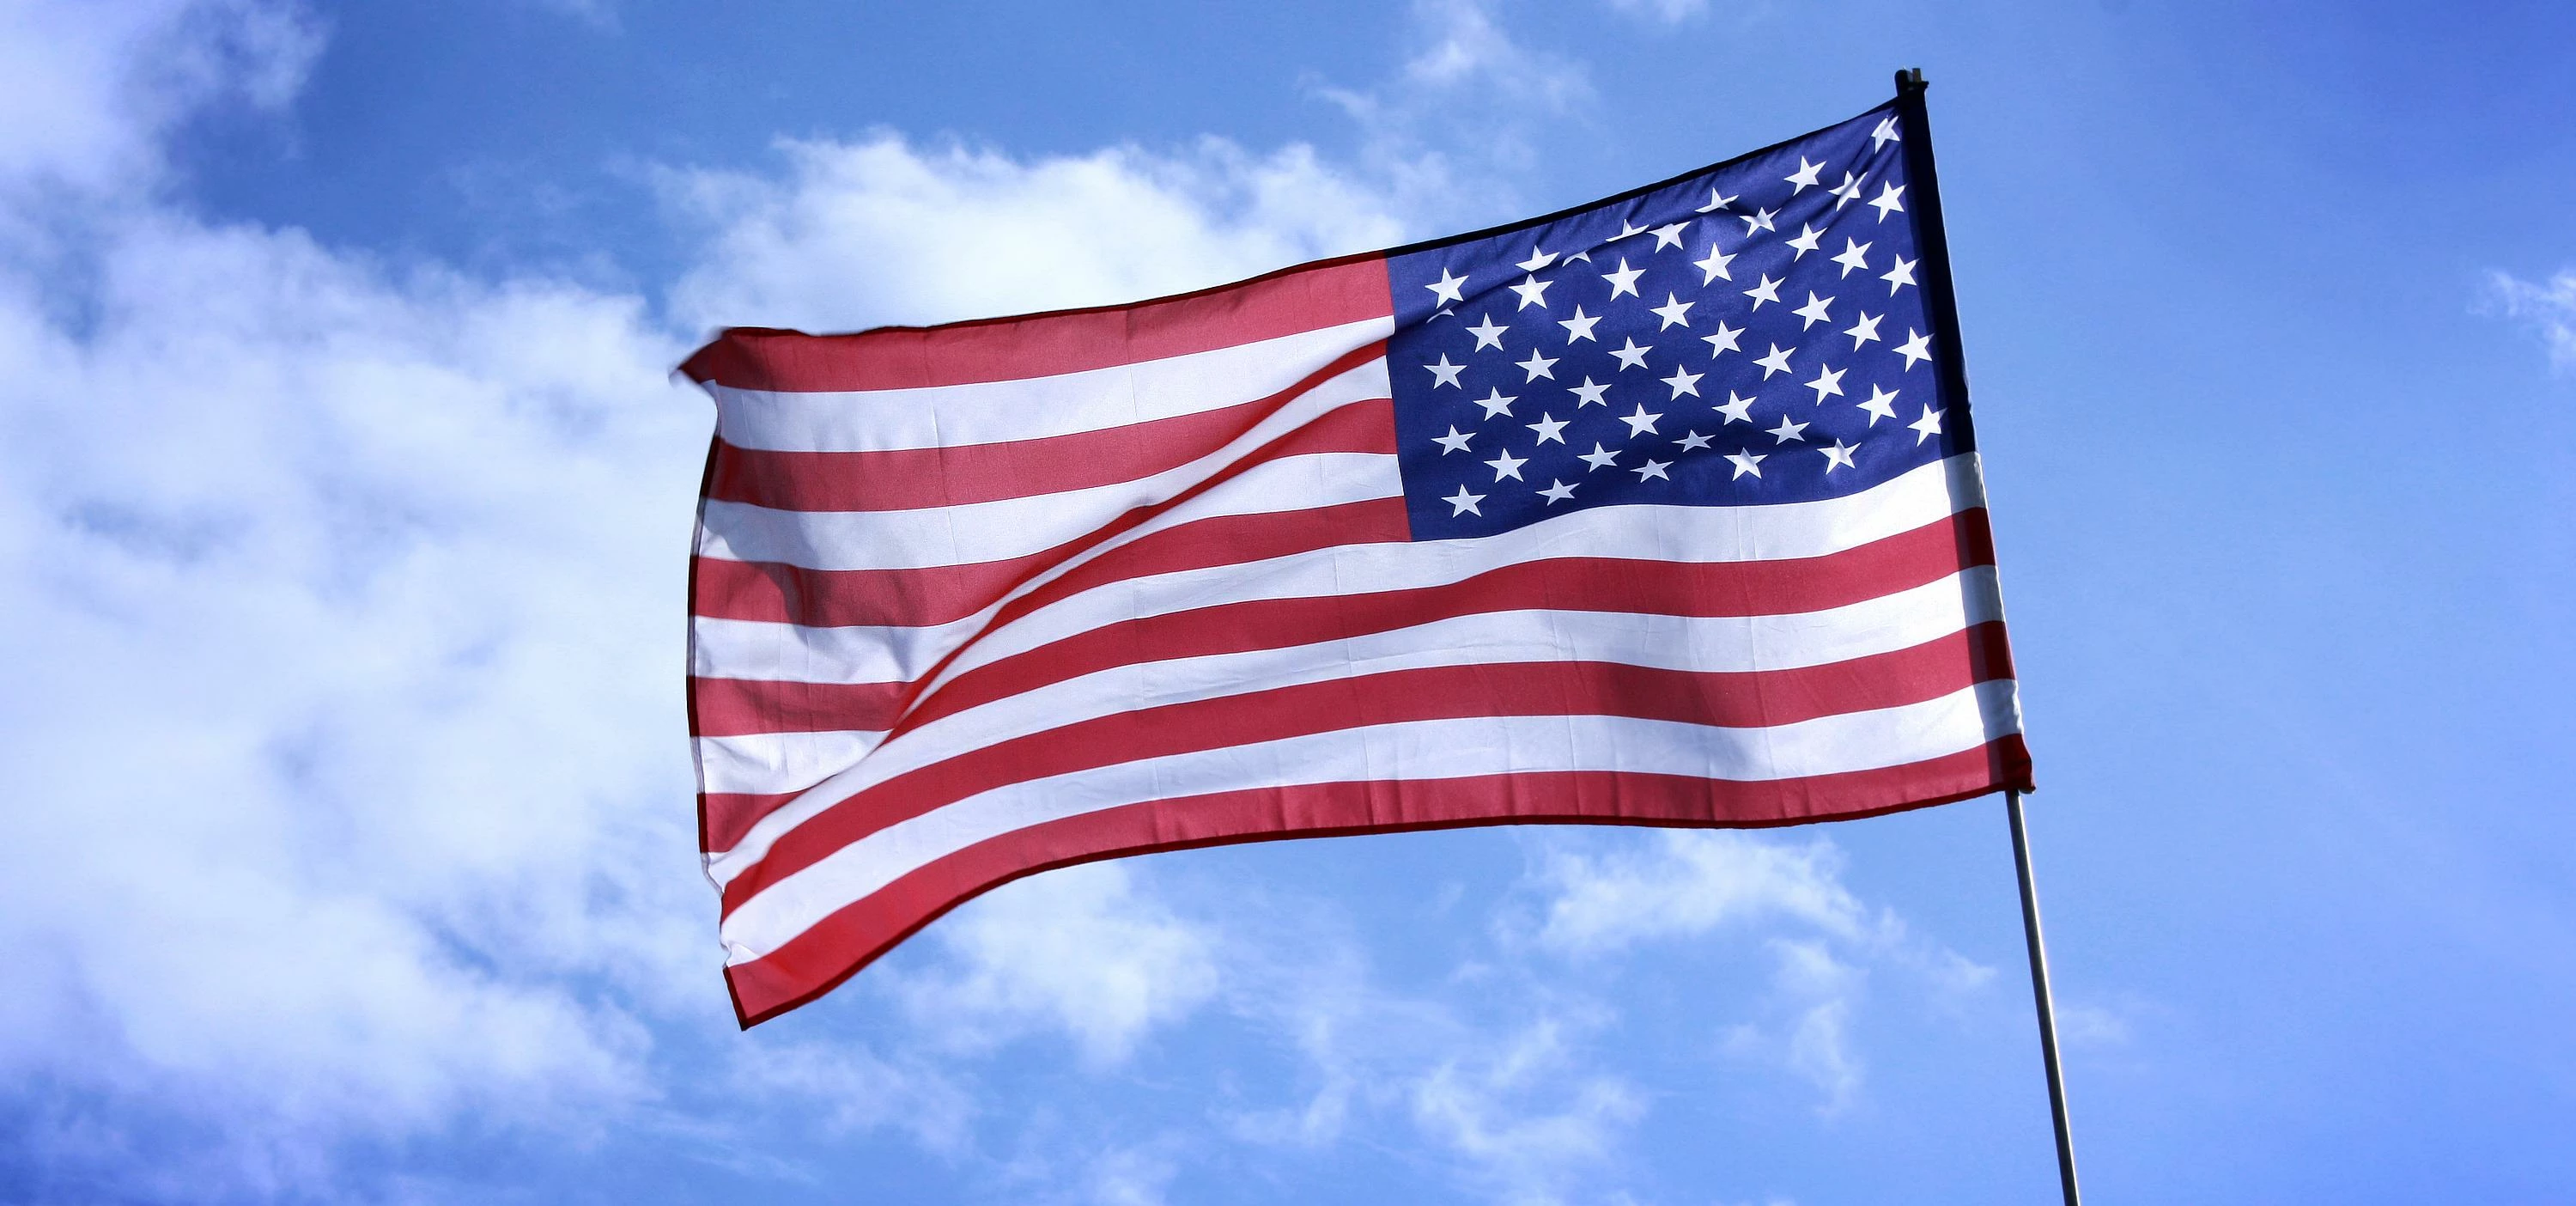 https://upload.wikimedia.org/wikipedia/commons/e/ea/American_flag.jpg